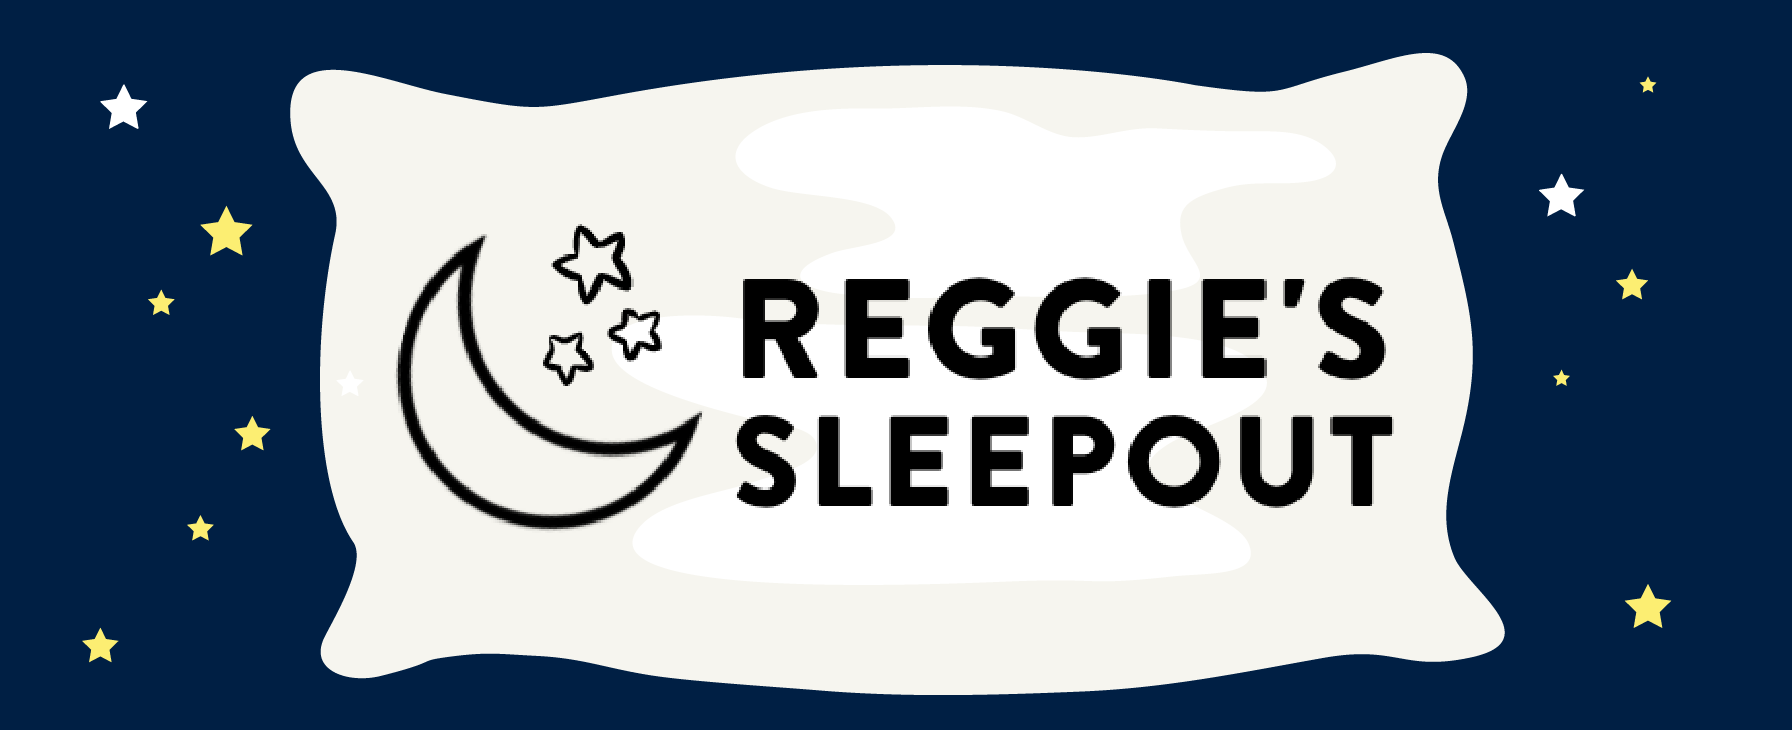 Reggie's Sleepout